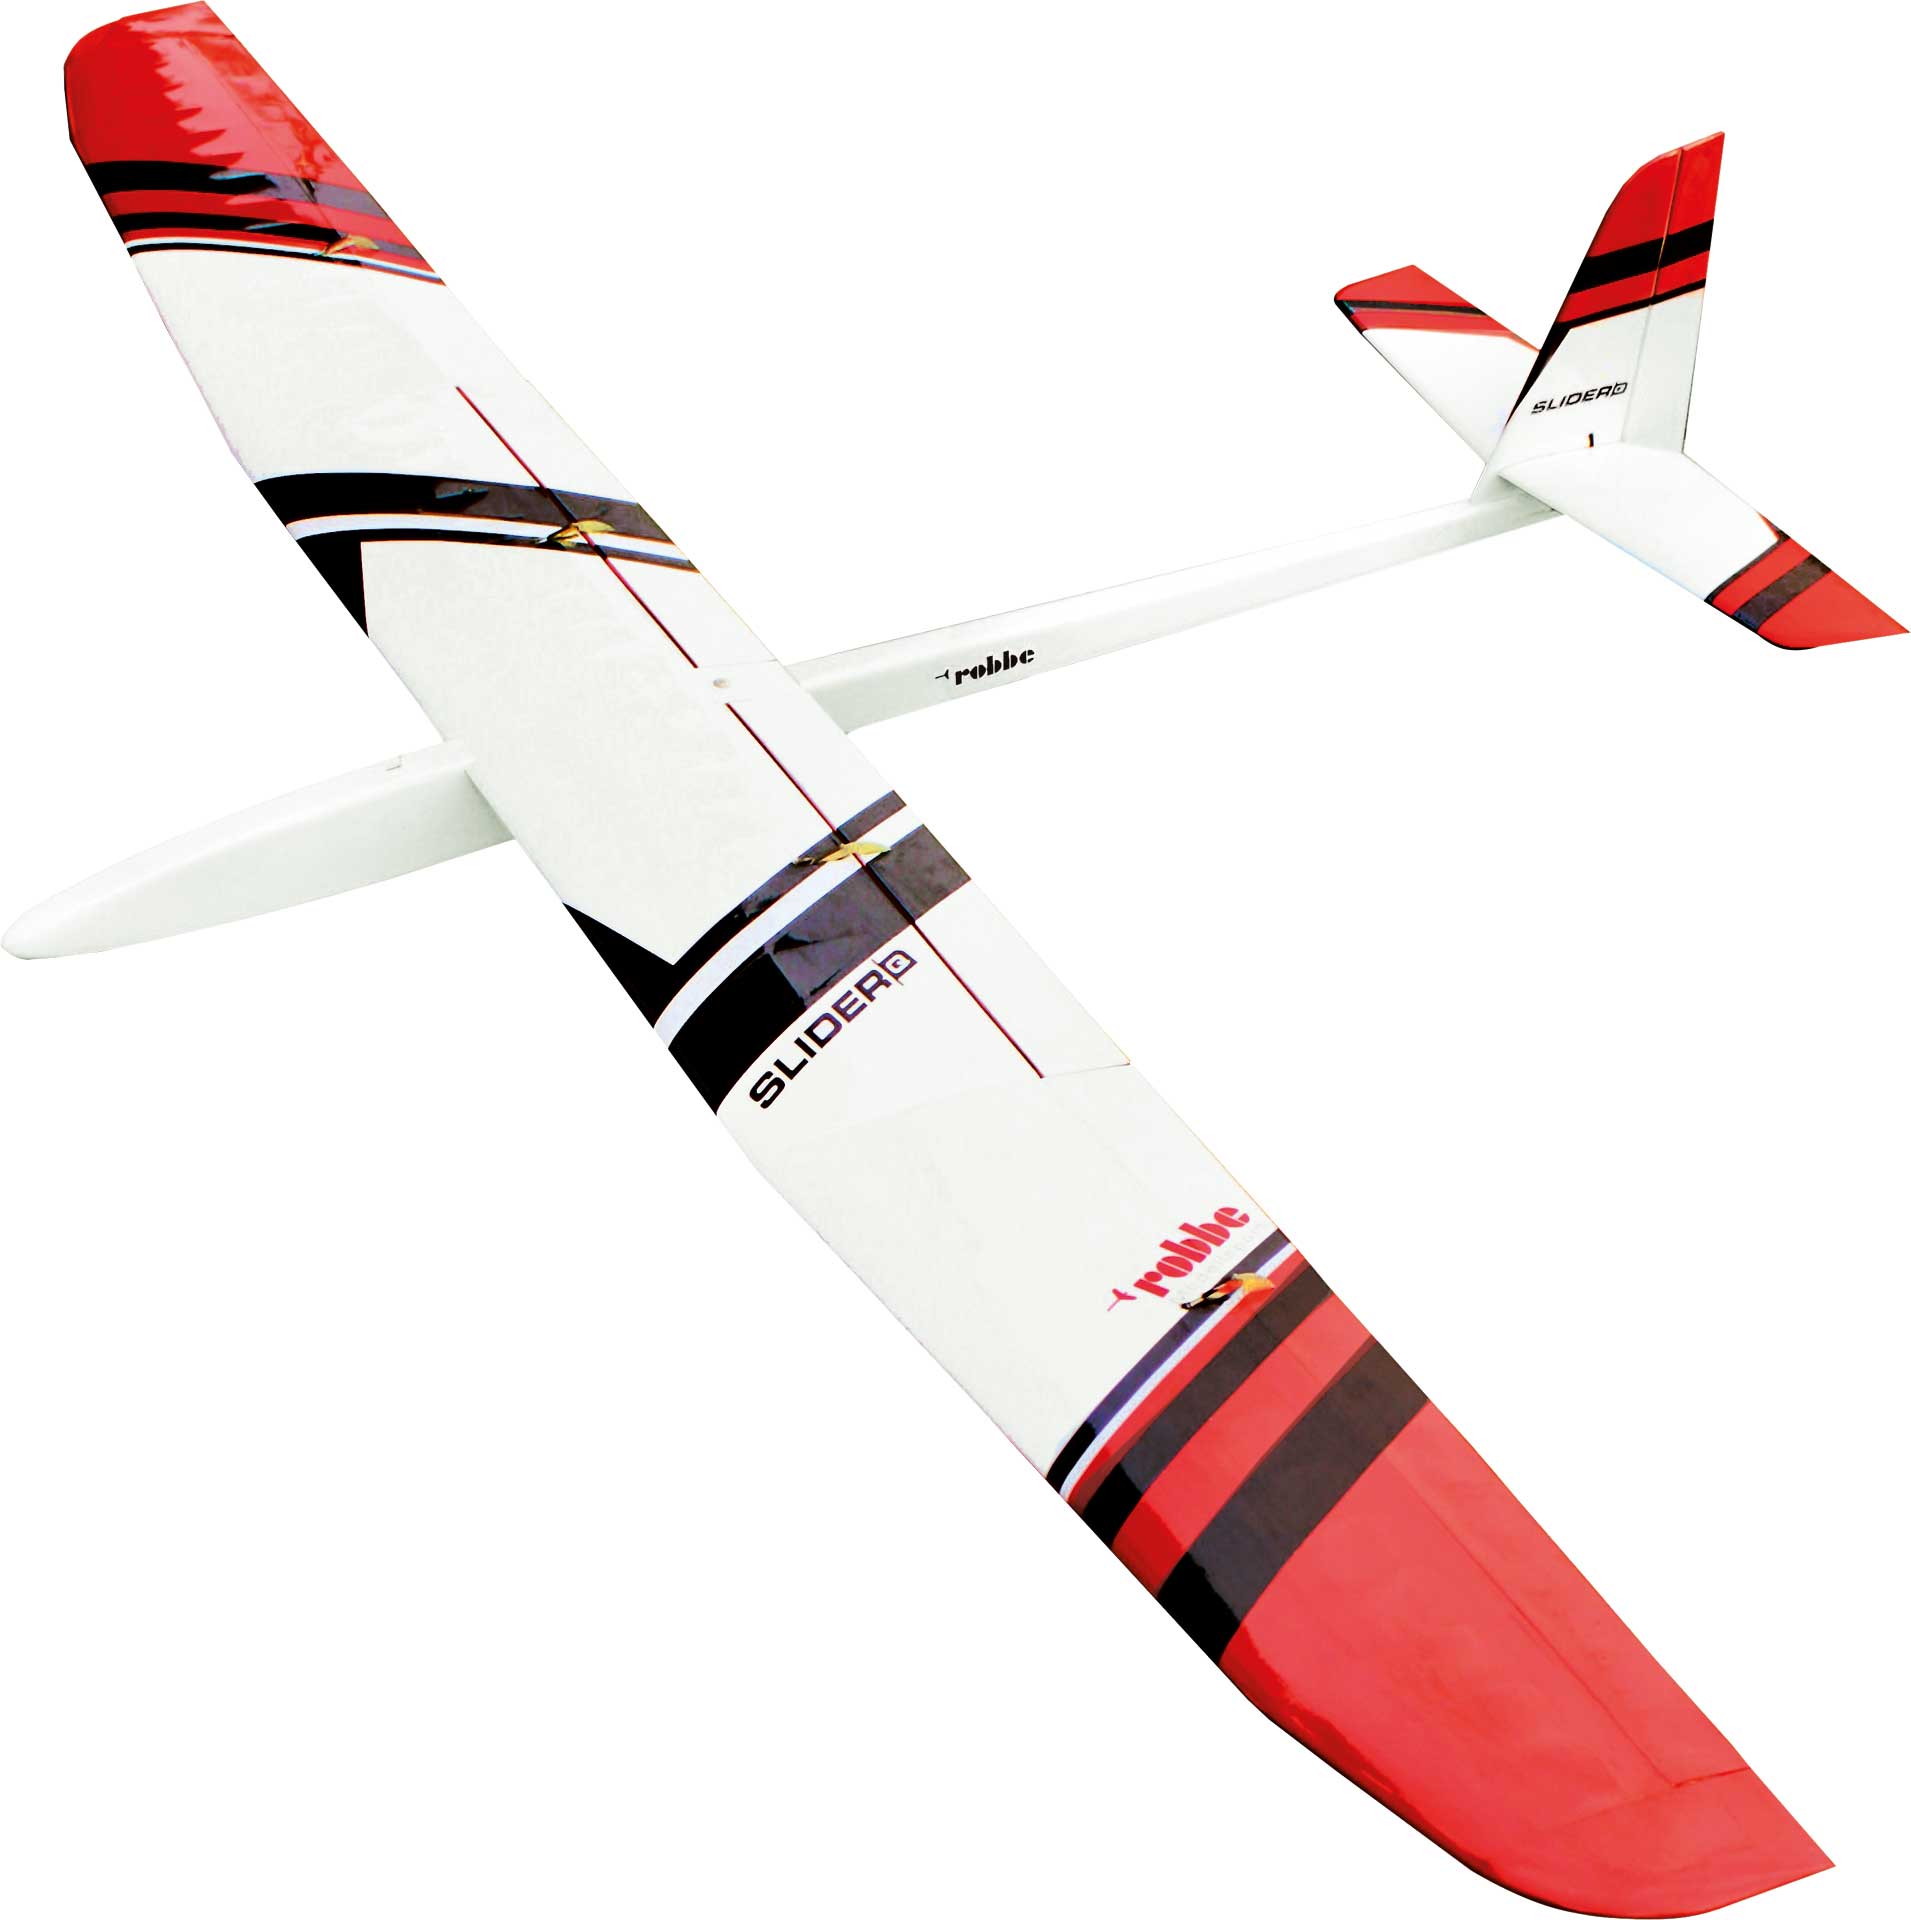 Robbe Modellsport Slider Q High Performance 4 flaps glider model, plywood/balsa wood kit "Made in Austria